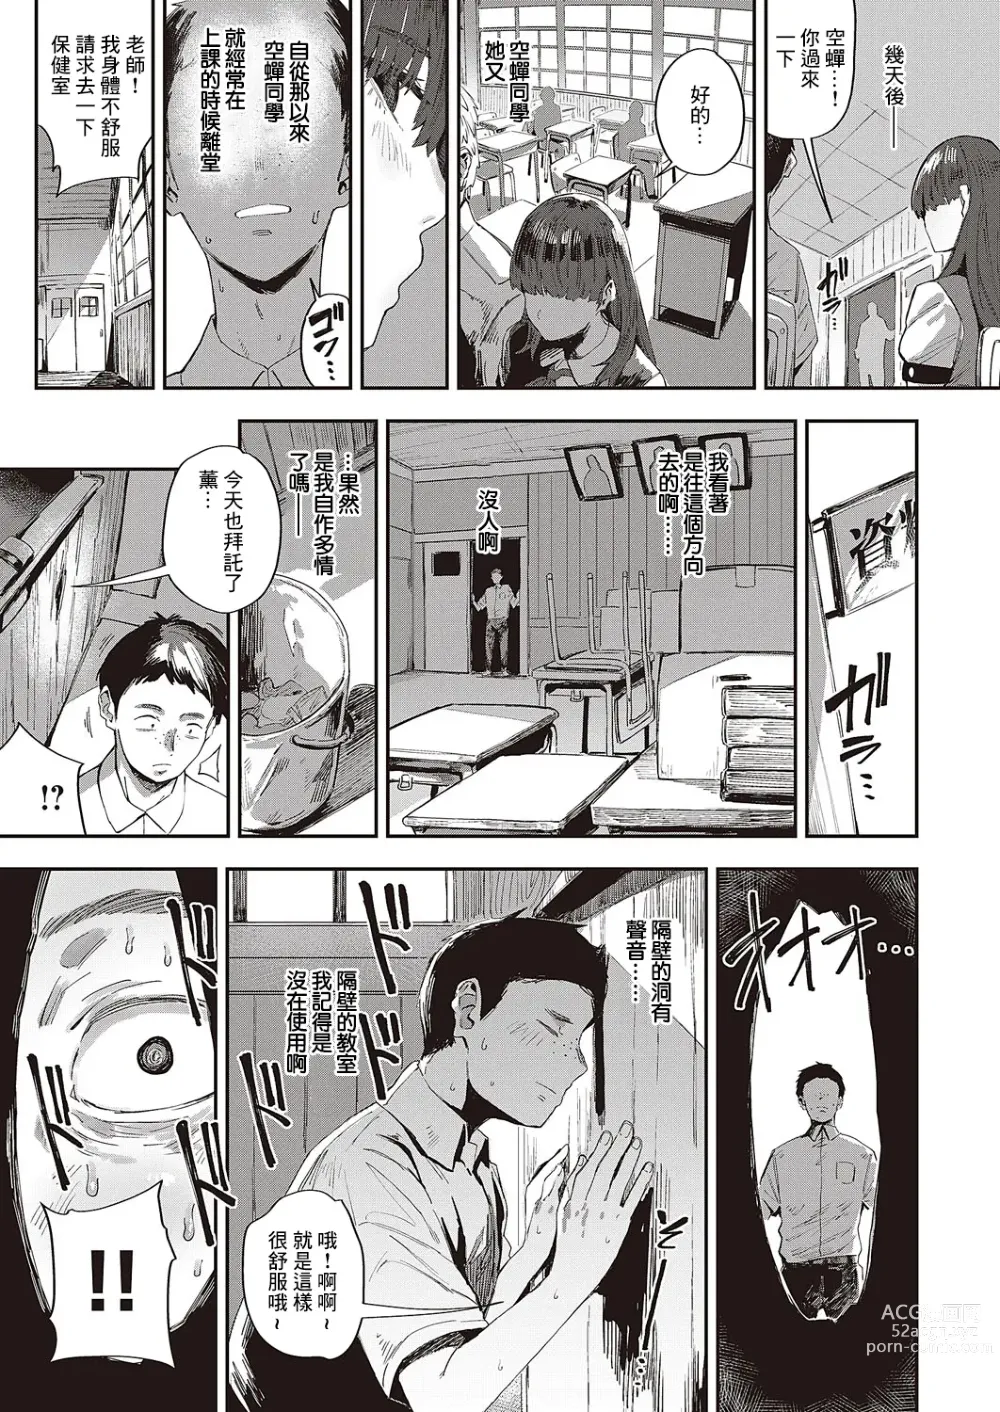 Page 3 of manga Semishigure no Tenkousei